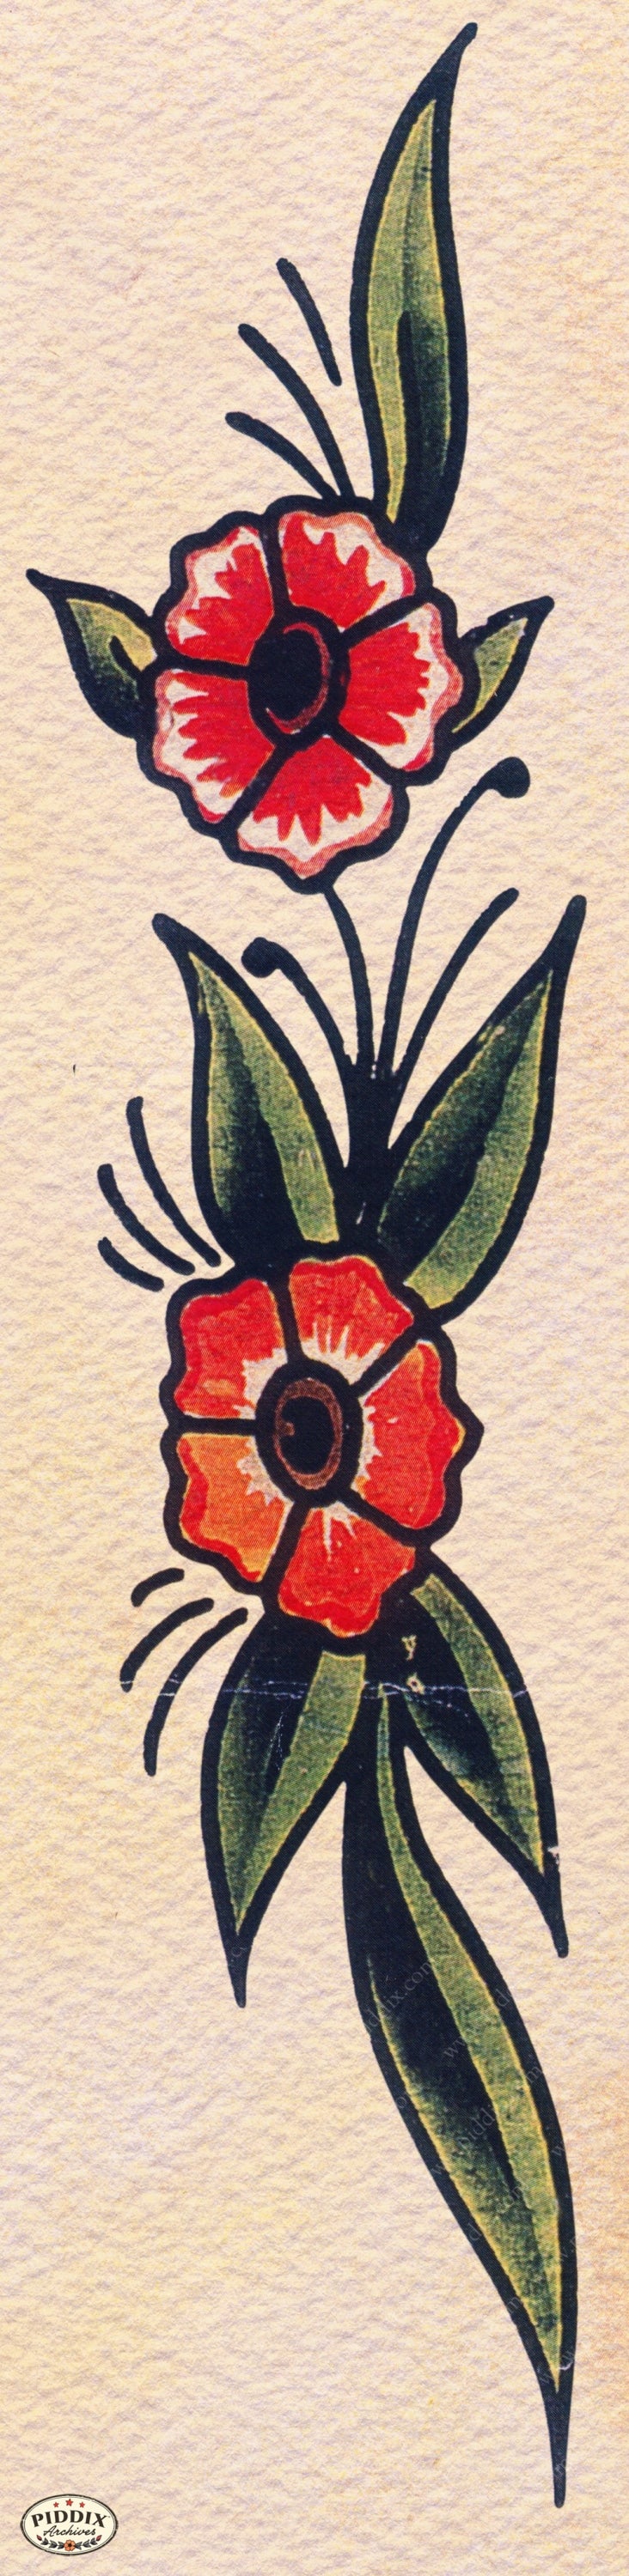 Killer Bee Tattoo Studio - Hopeless Romantic with a pinwheel flower by Dan.  | Facebook